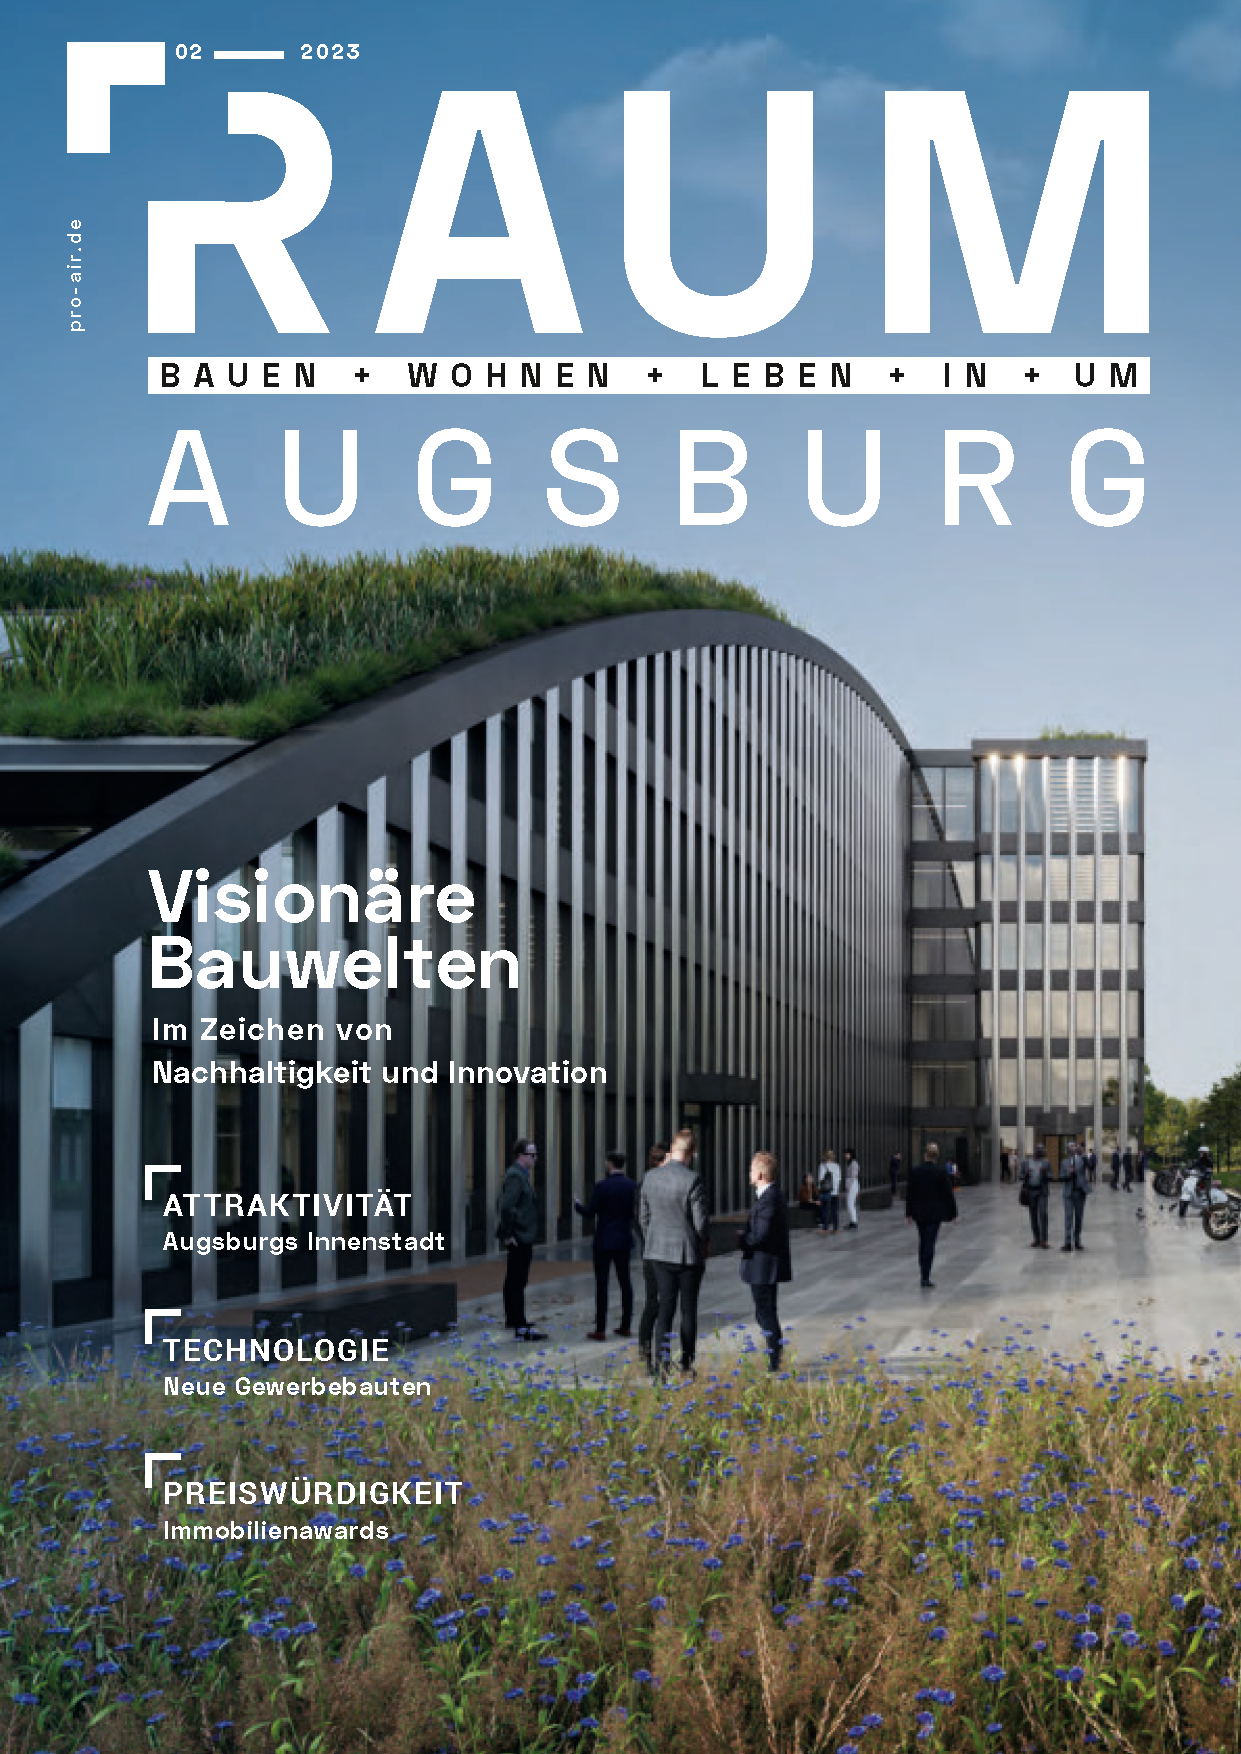 Magazin RAUM Augsburg - Titelseite 02/2023